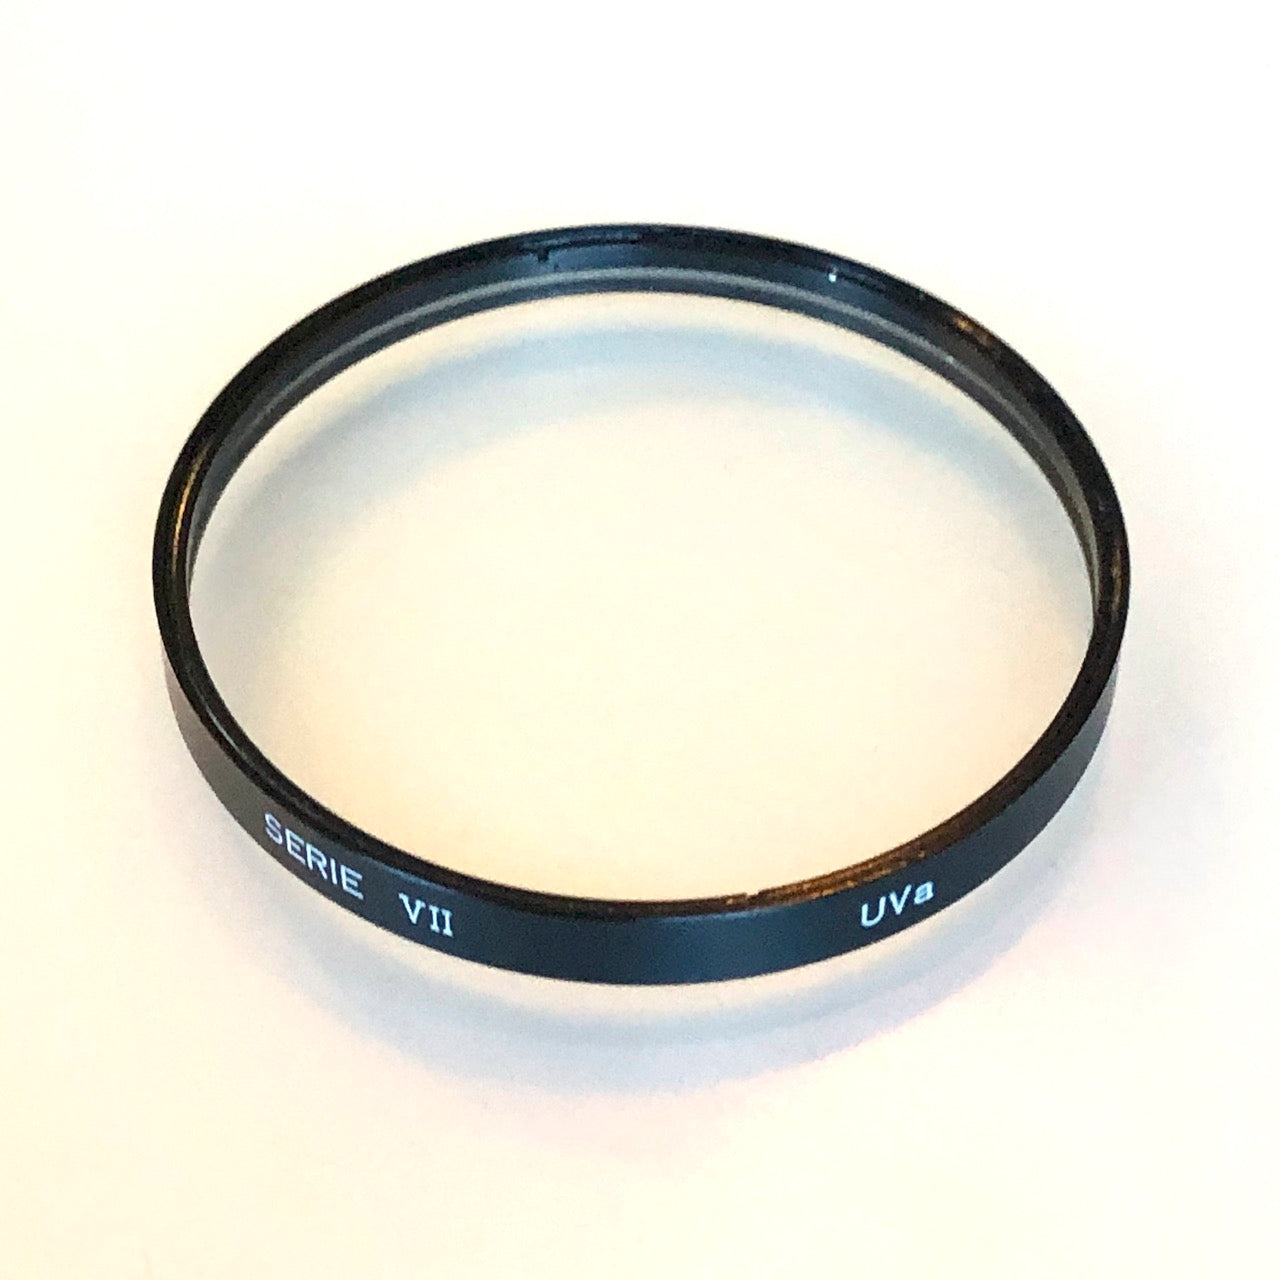 Leitz UVa filter (Series VII)